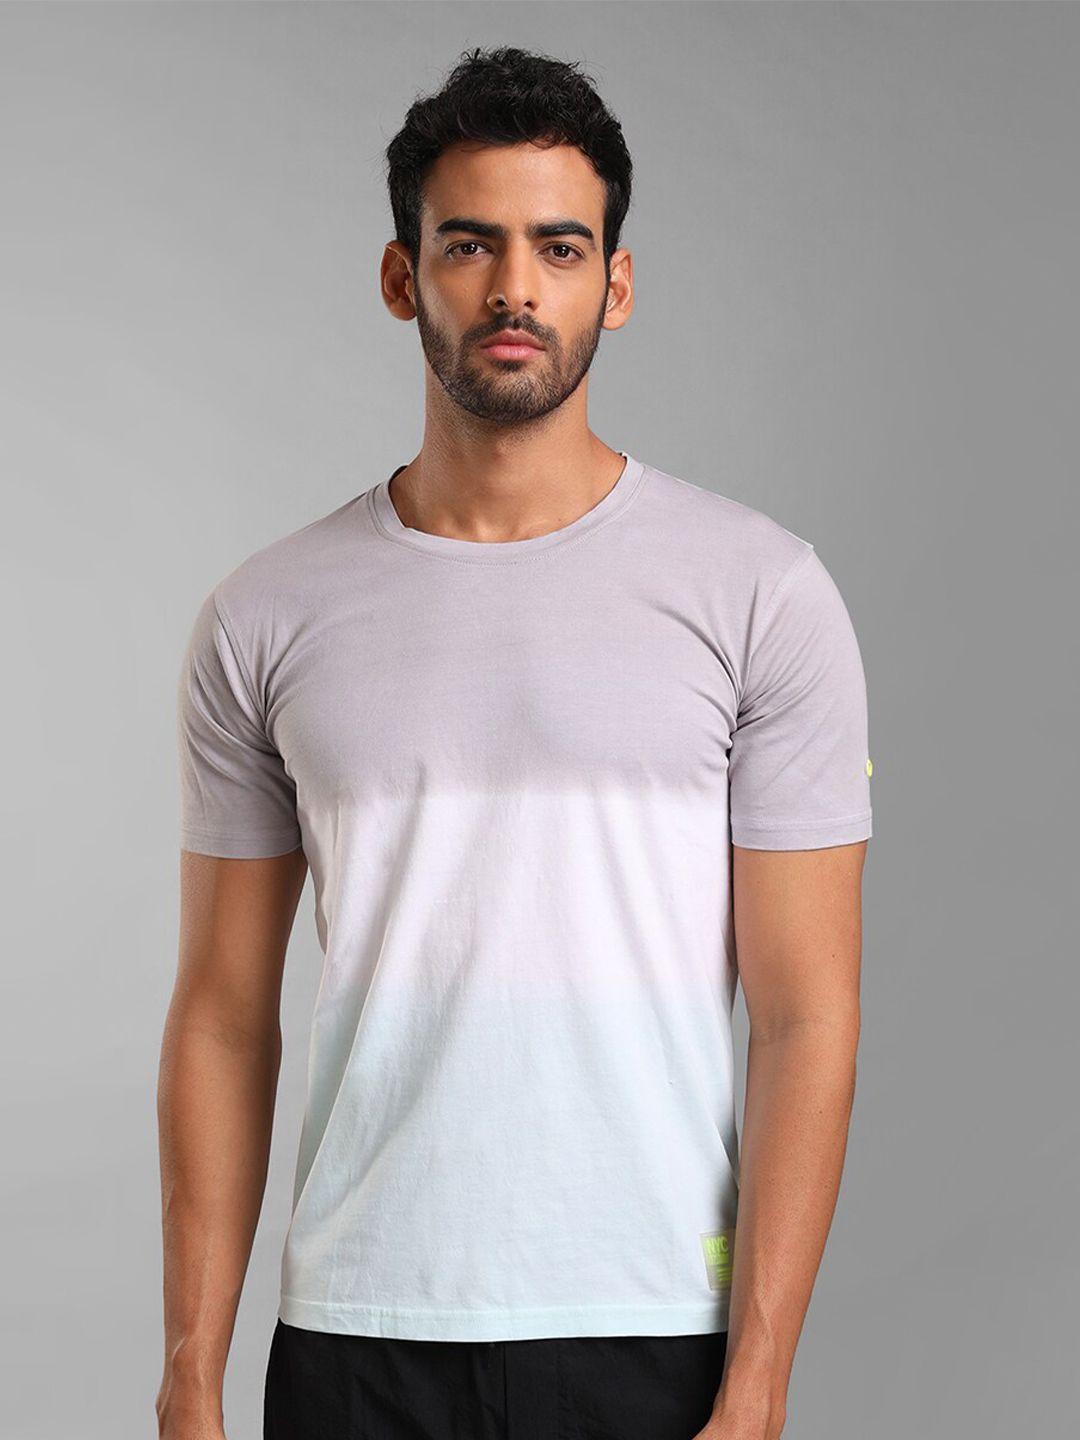 kz07 by kazo men colourblocked cotton t-shirt